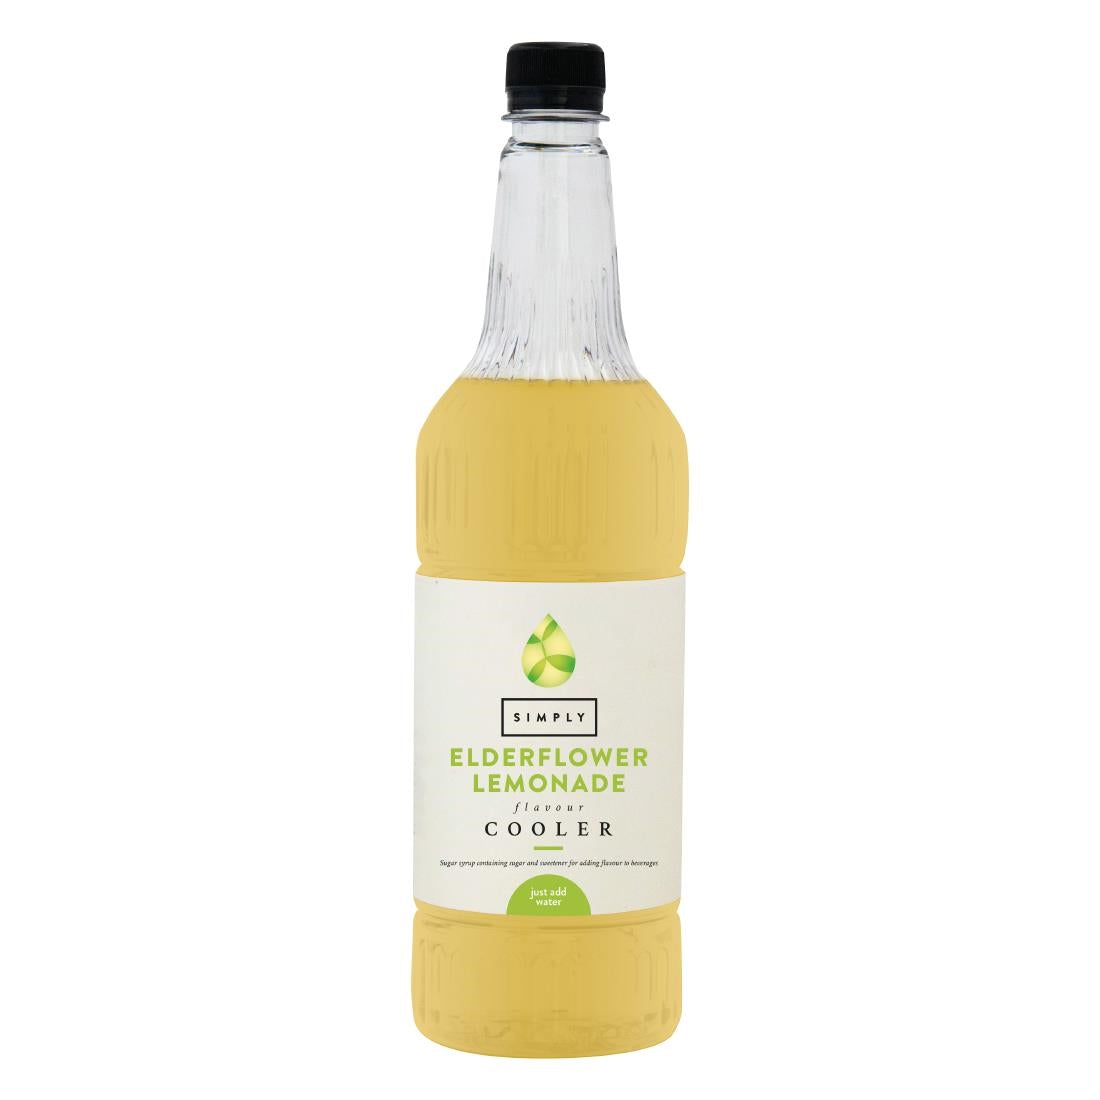 HT807 Simply Elderflower Lemonade Cooler Syrup 1Ltr